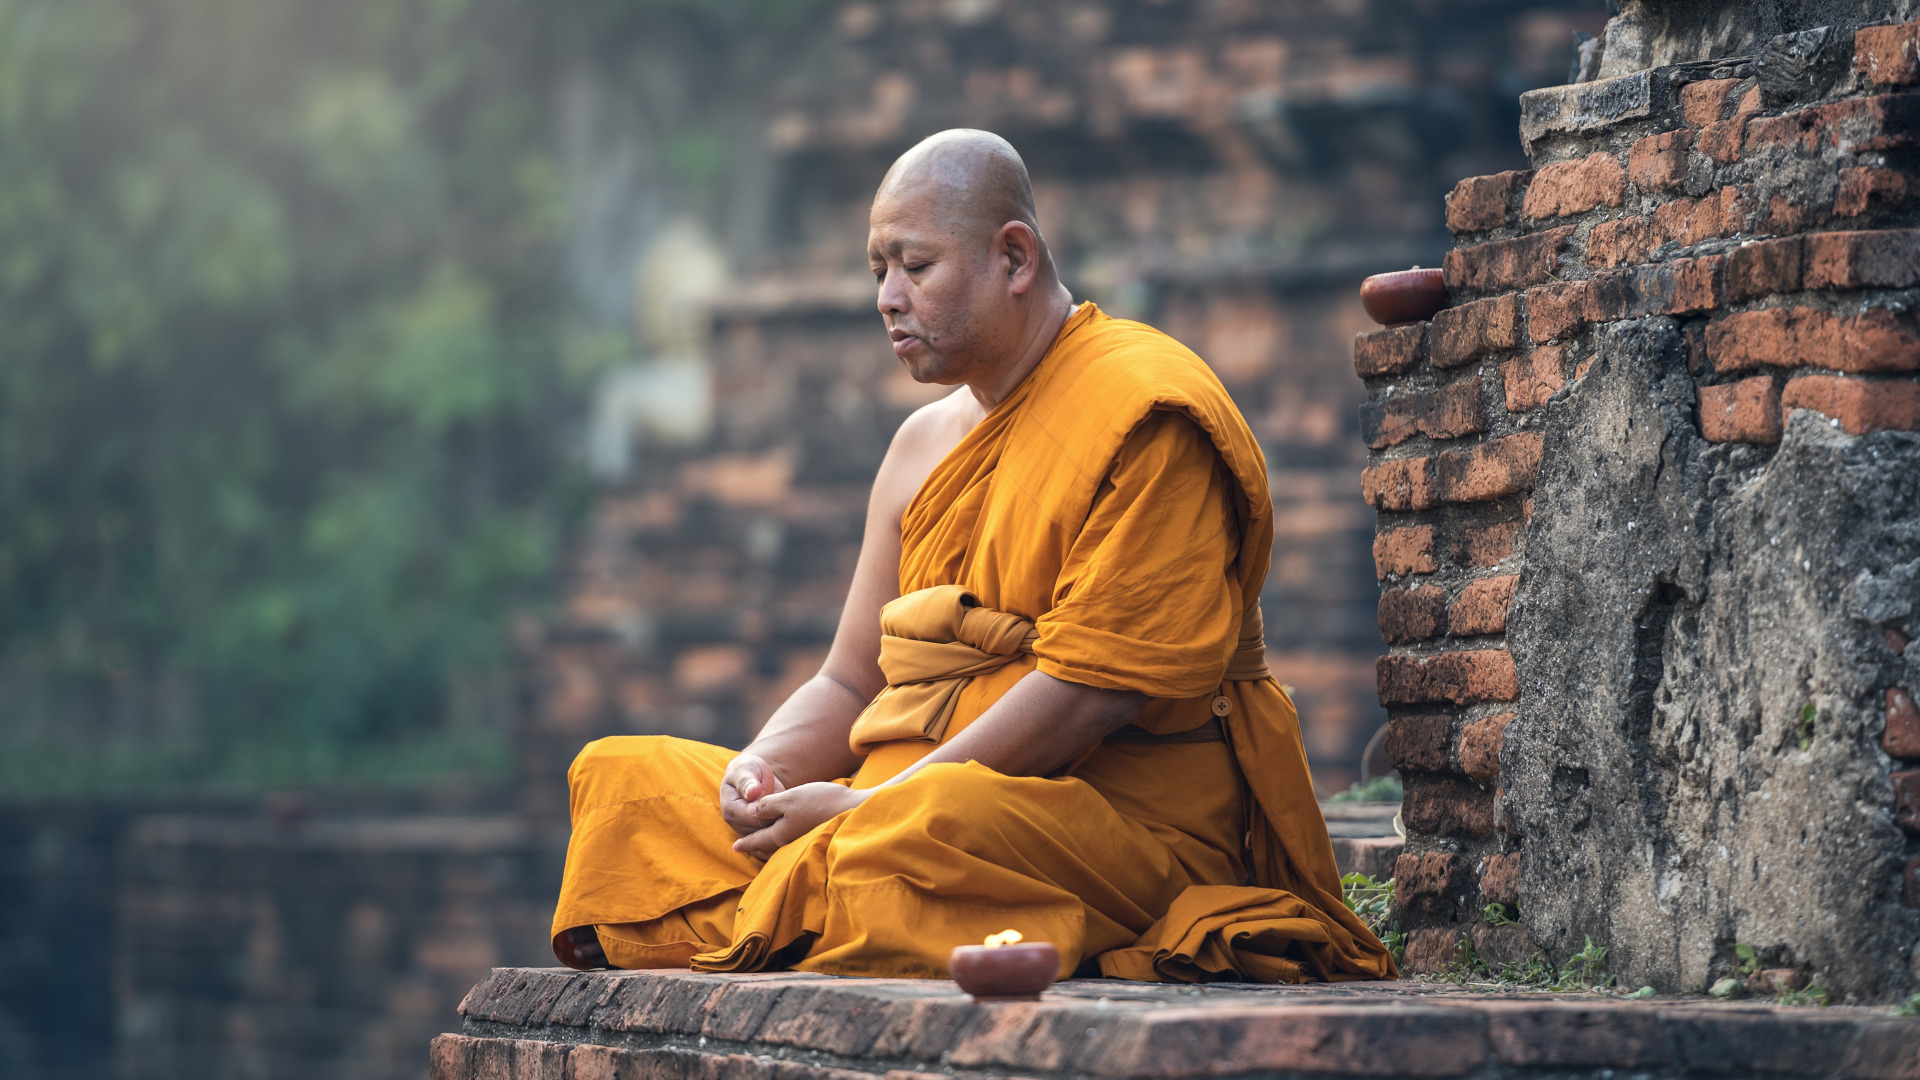 Men Photography Outdoors Monks Bald Bald Head Buddhism Meditation Depth Of Field Sitting Yellow Dres 1920x1080